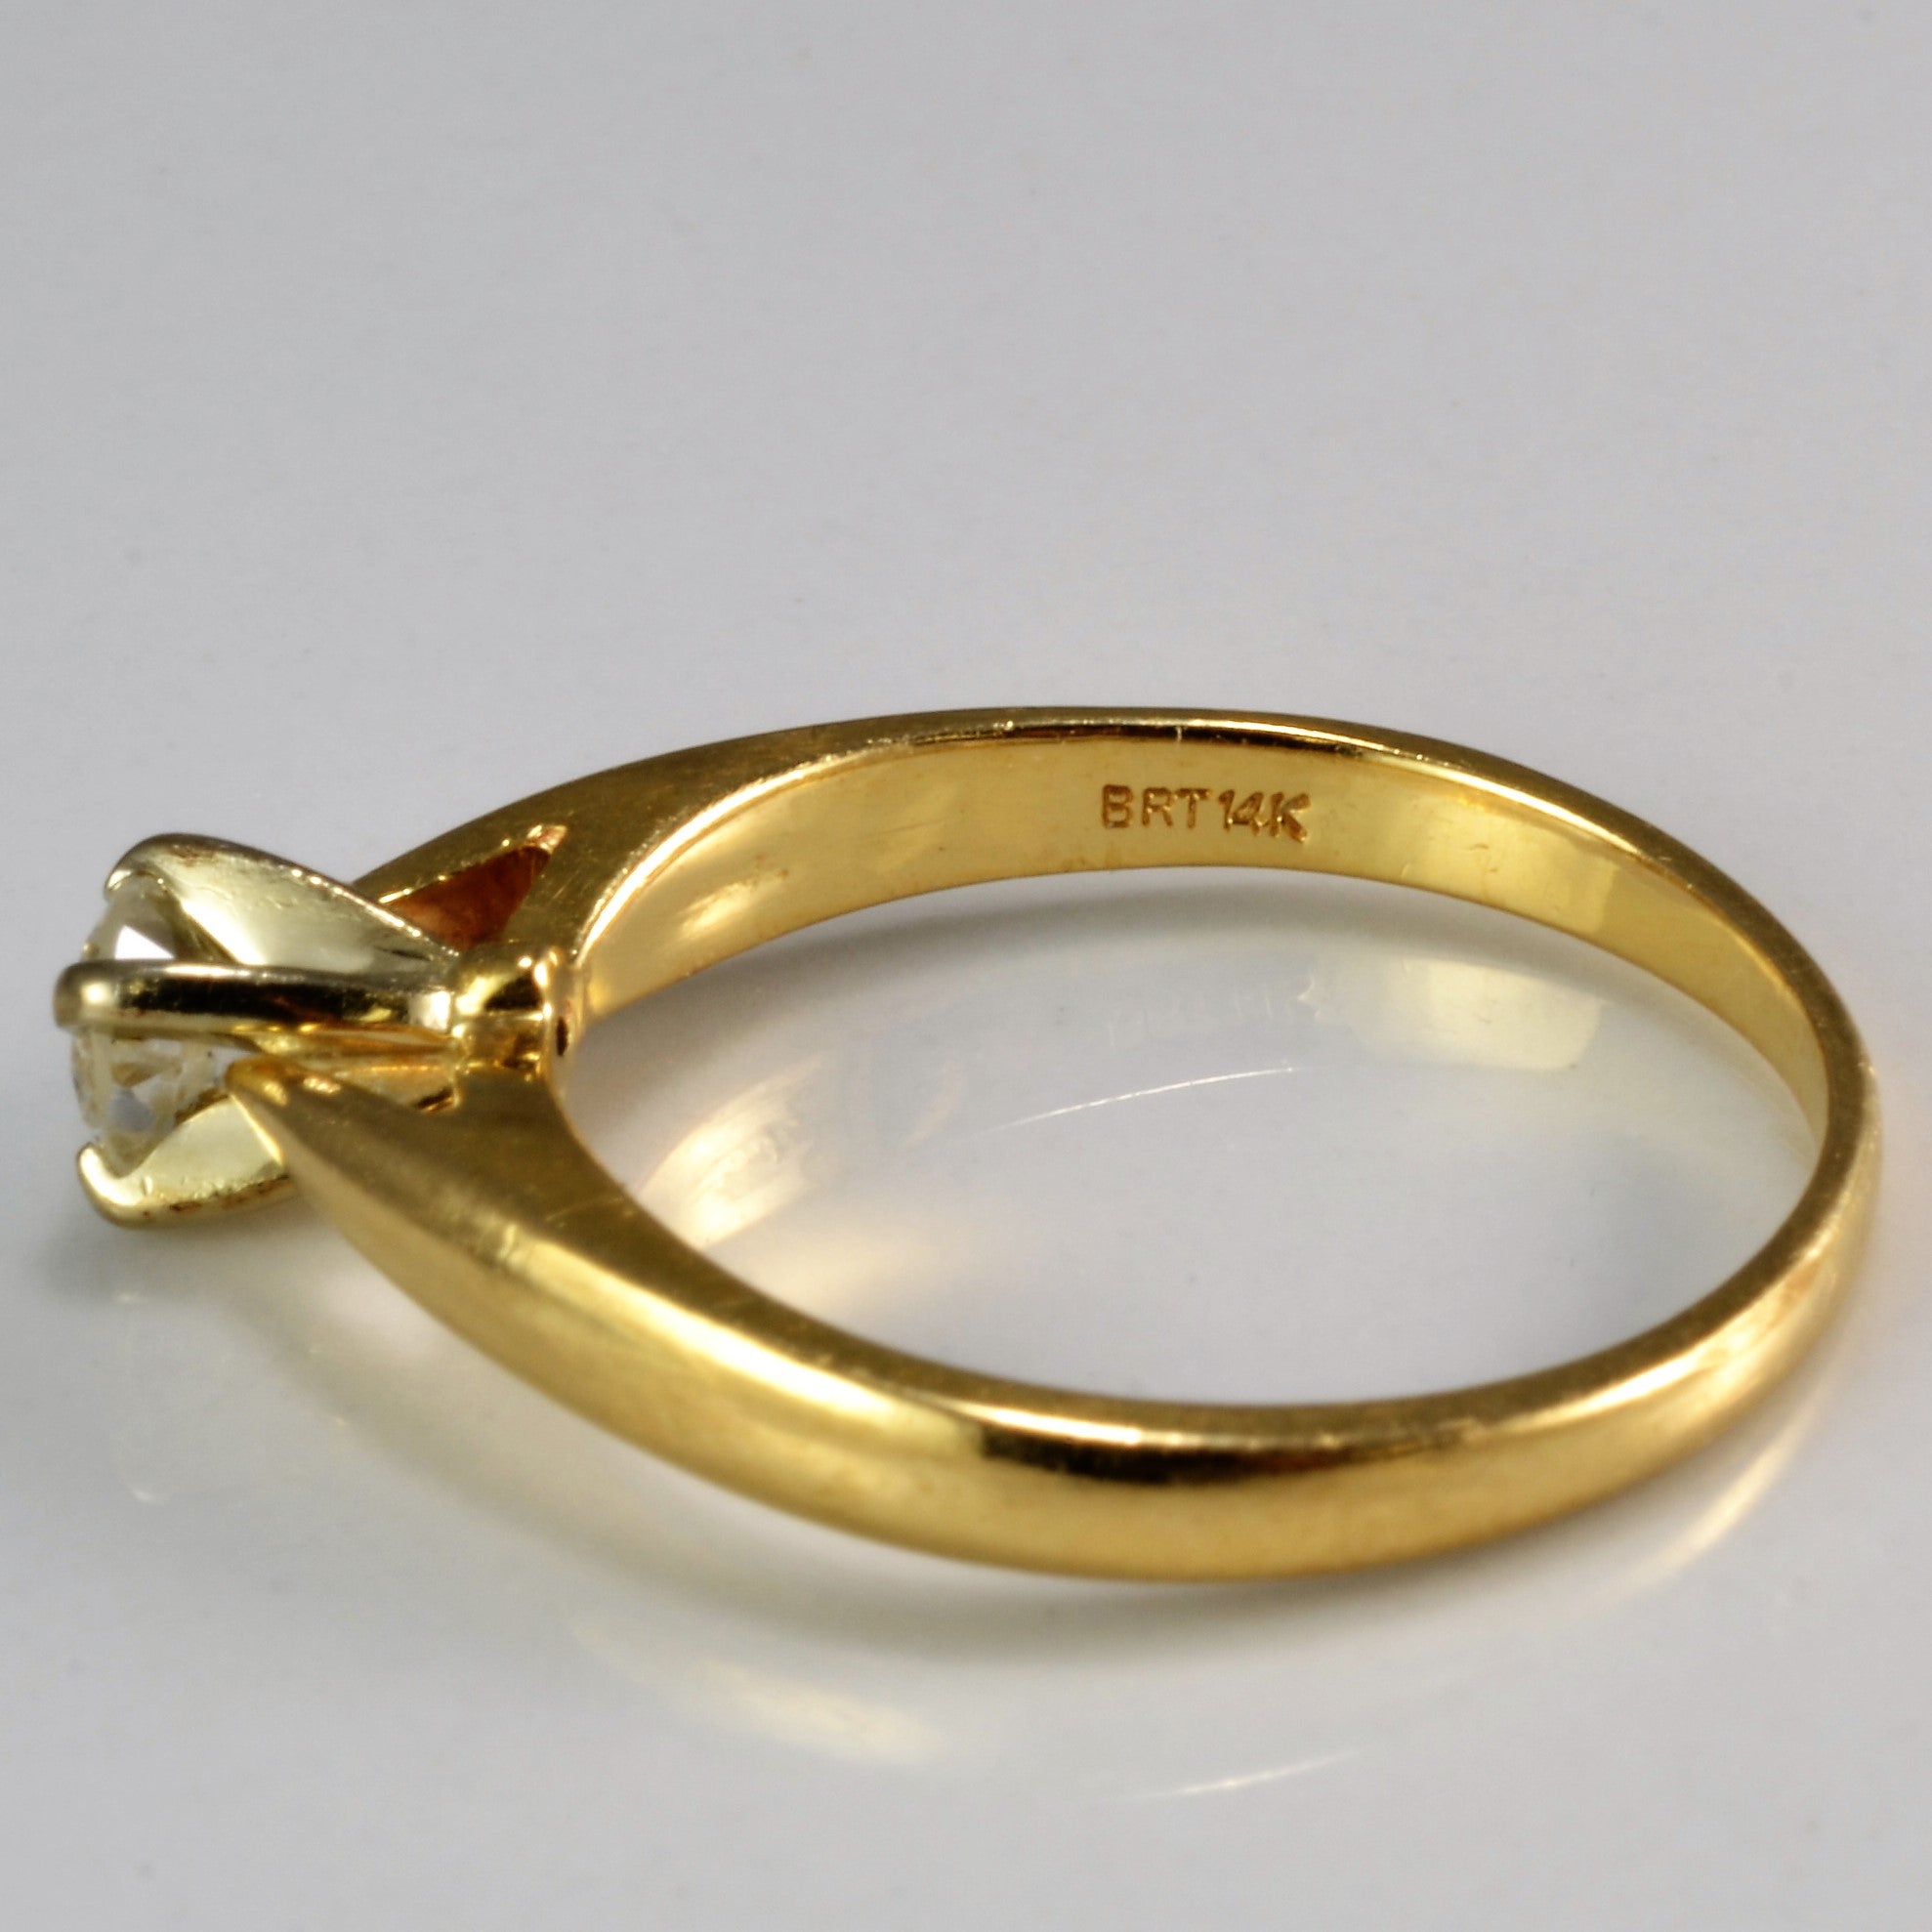 Prong Set Solitaire Diamond Engagement Ring | 0.23 ct, SZ 5 |